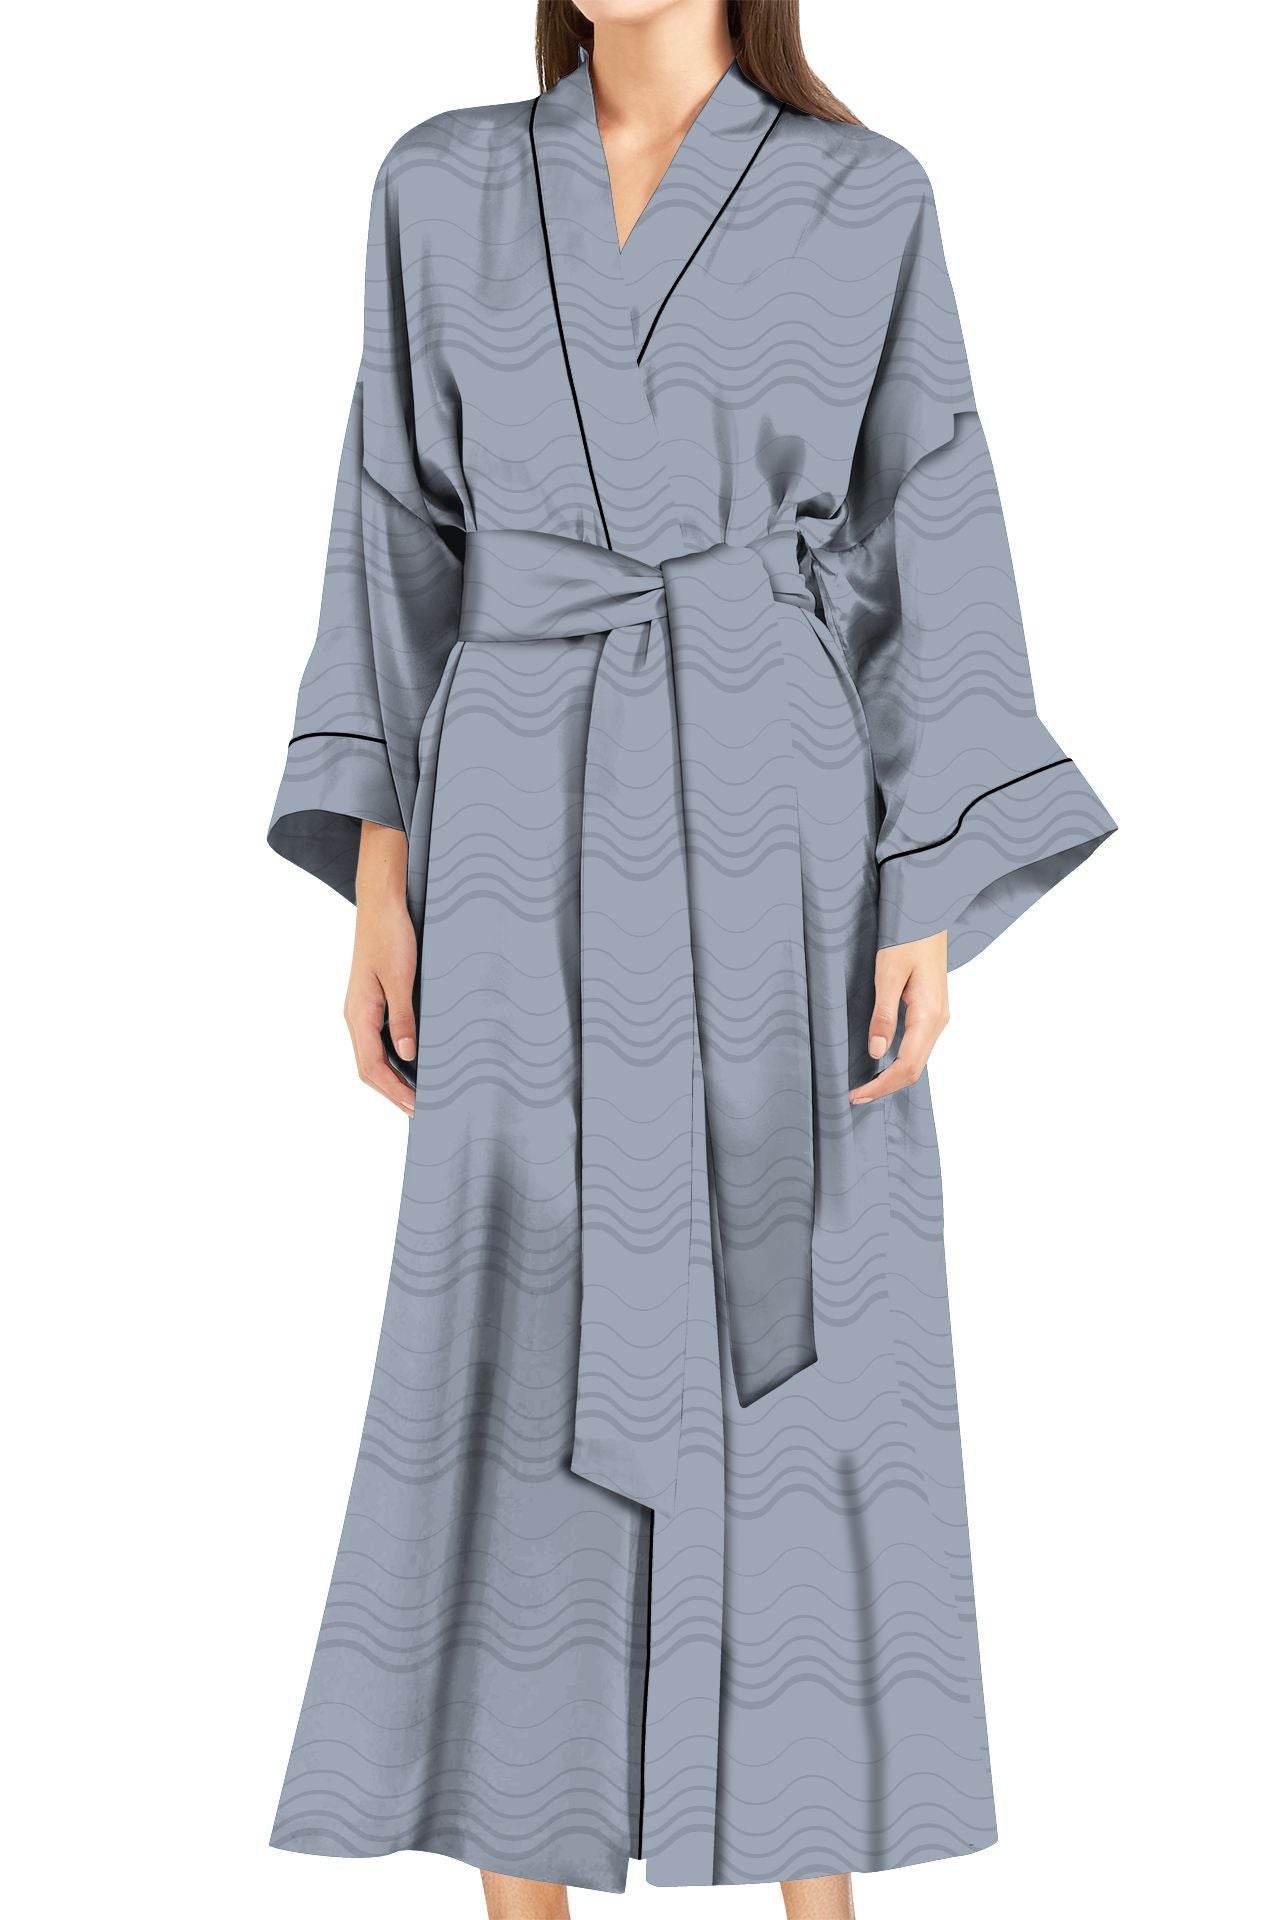 "Kyle X Shahida" "grey silk robe" "silk robes for women short" "light grey robe"